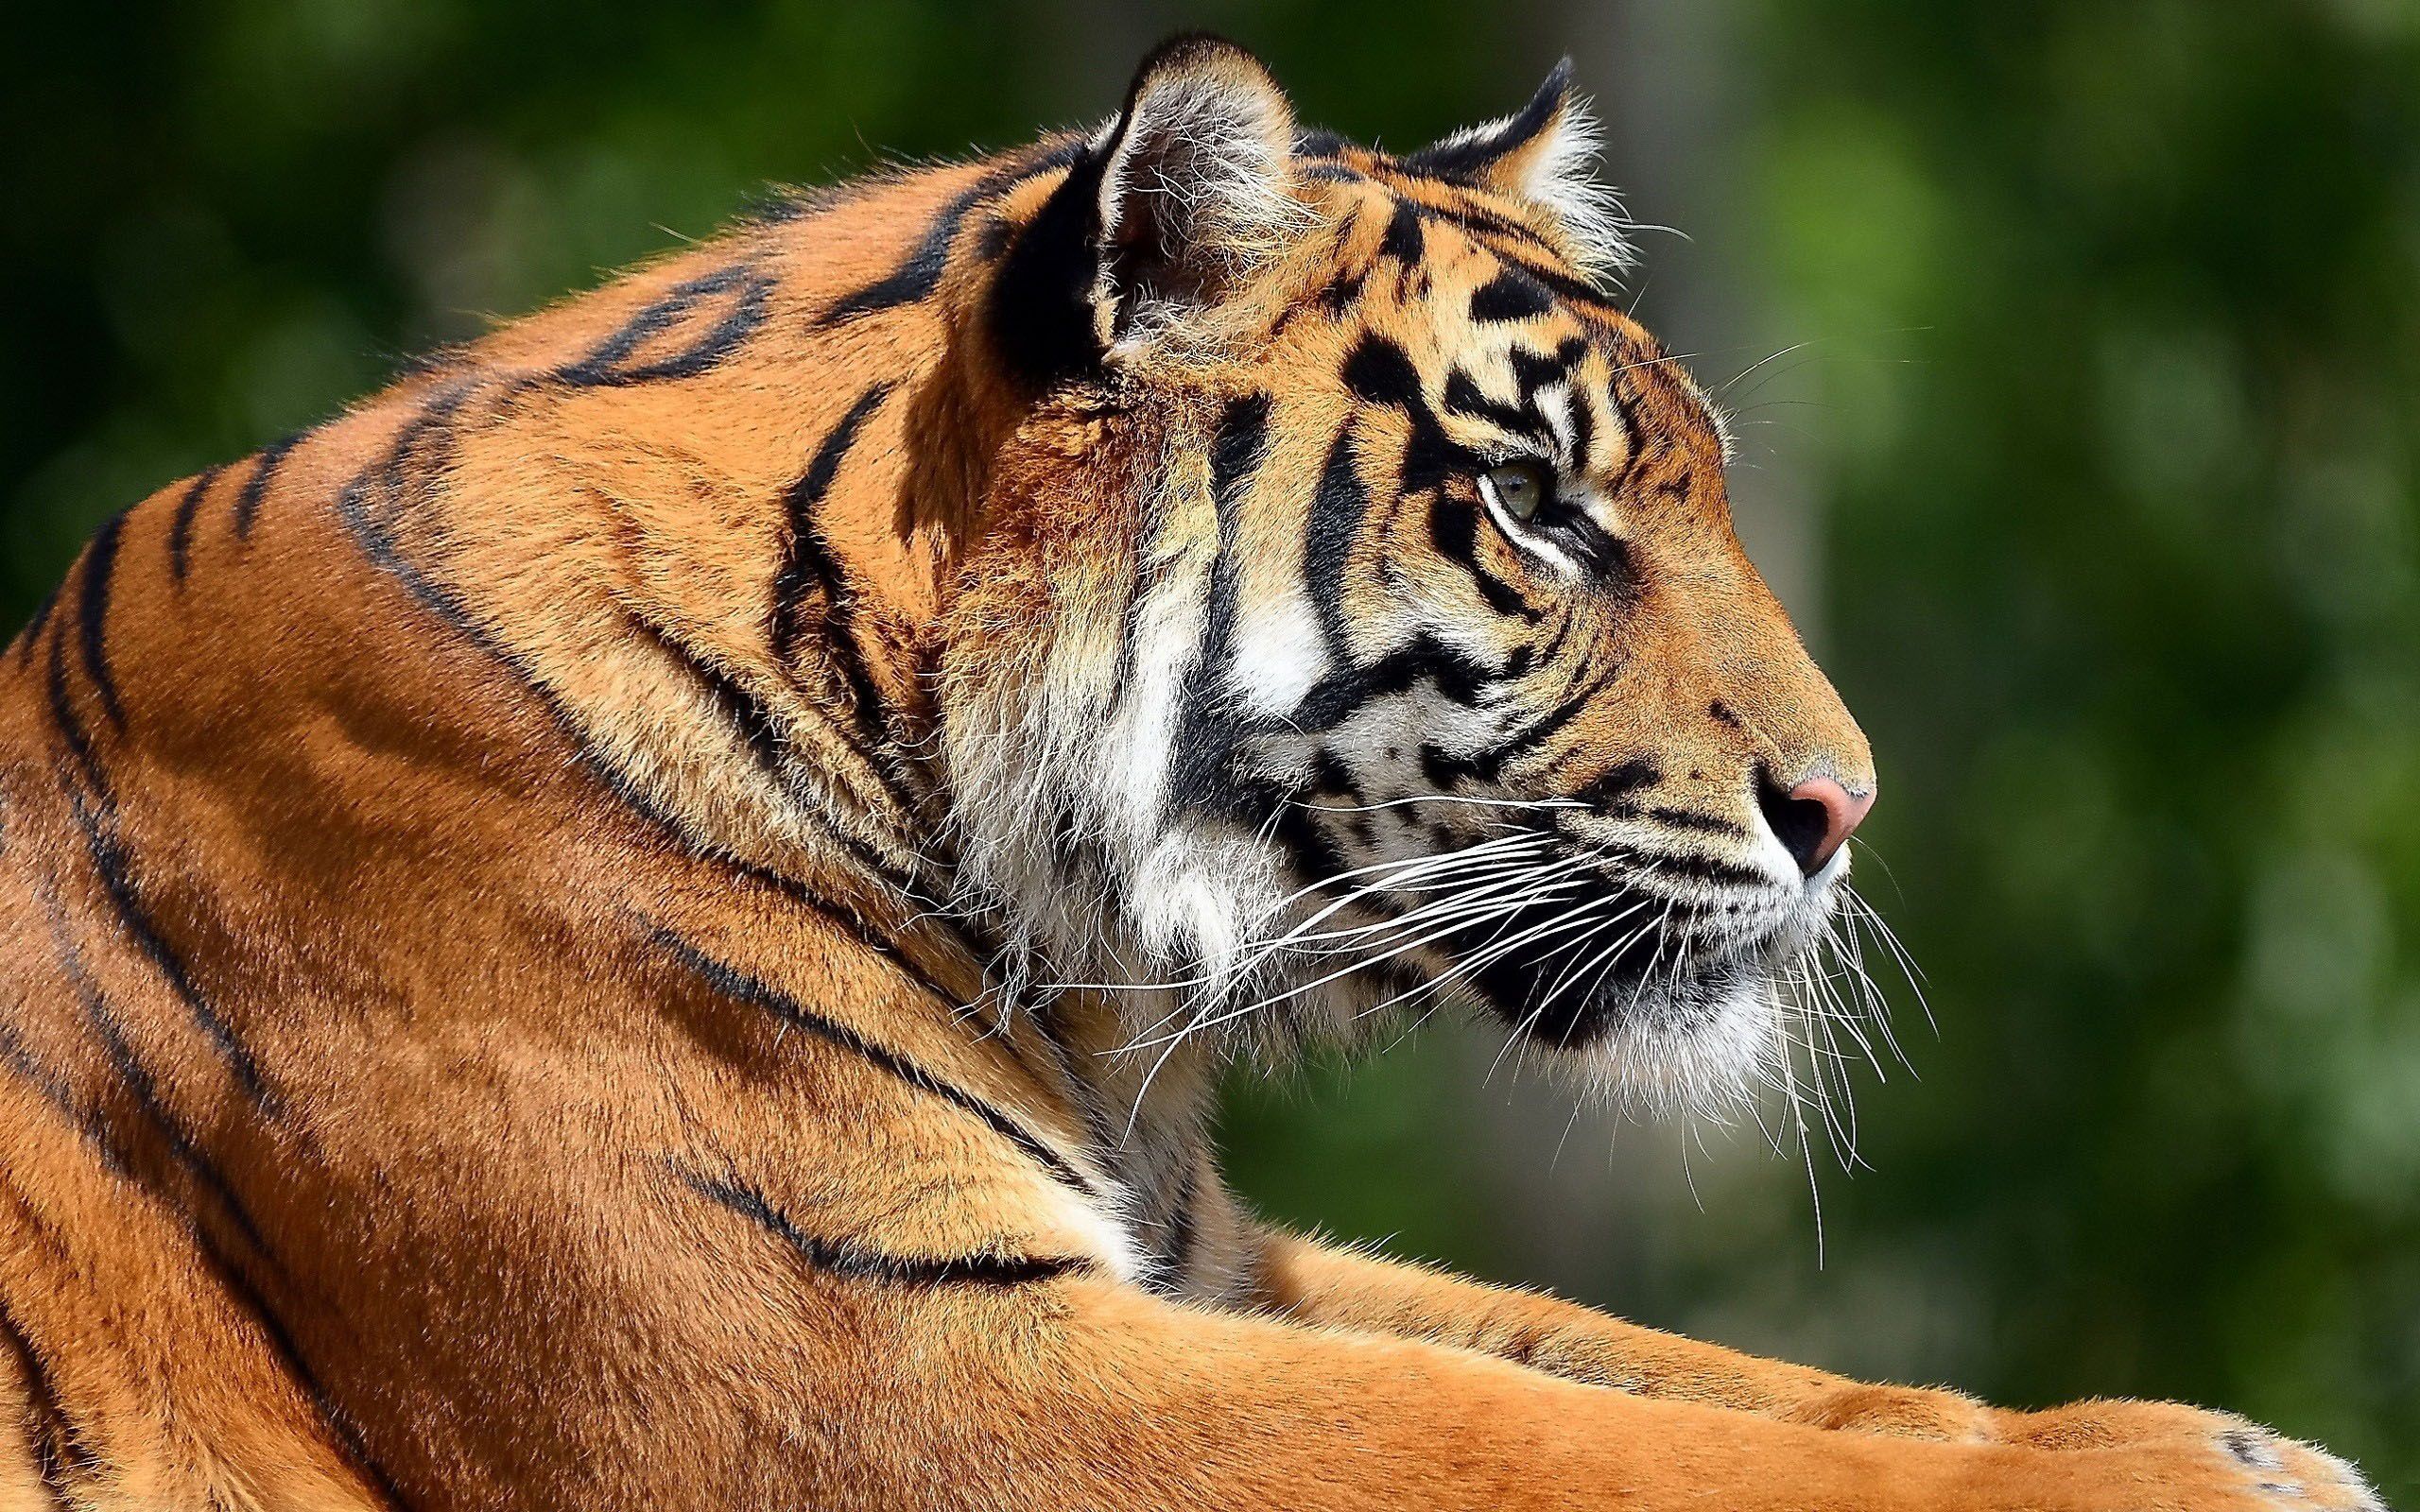 Majestic Tiger Wallpaper. Tiger image, Bengal tiger, Tiger wallpaper